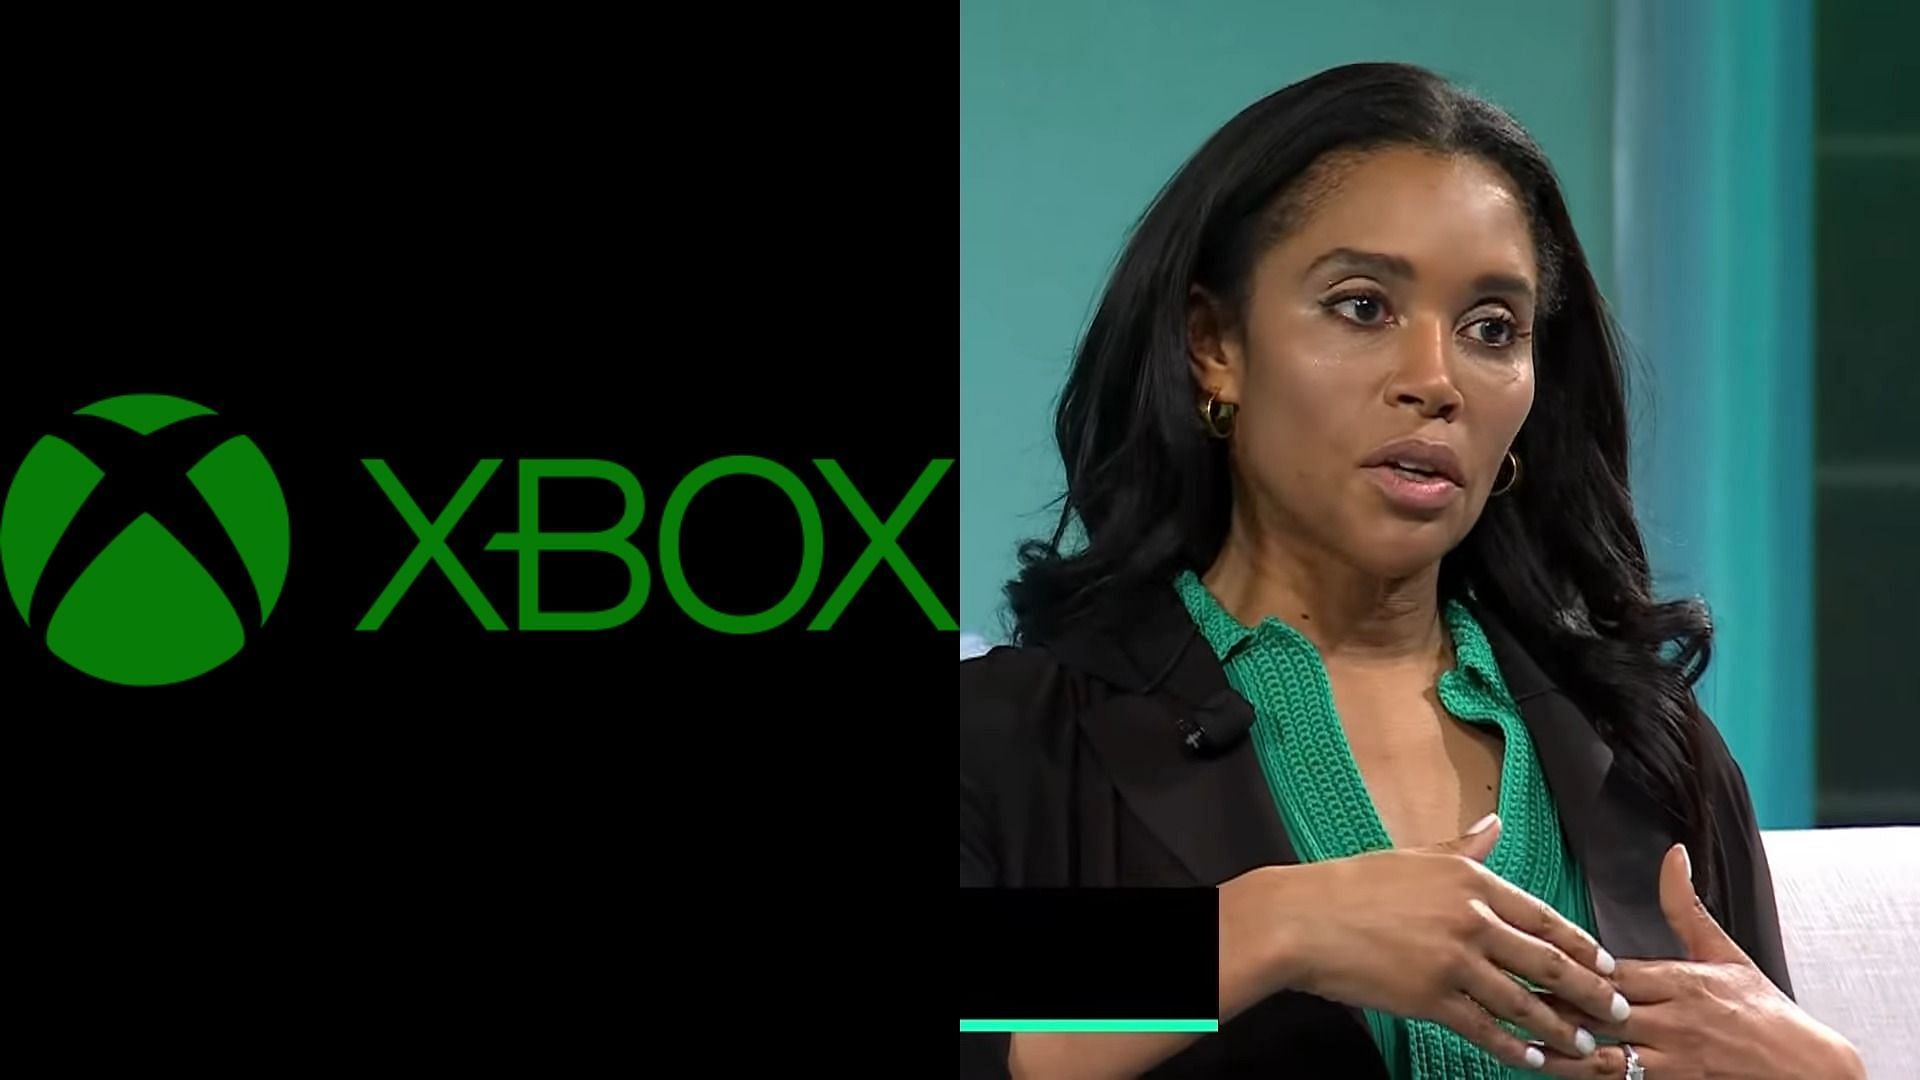 Sarah Bond on Xbox layoffs